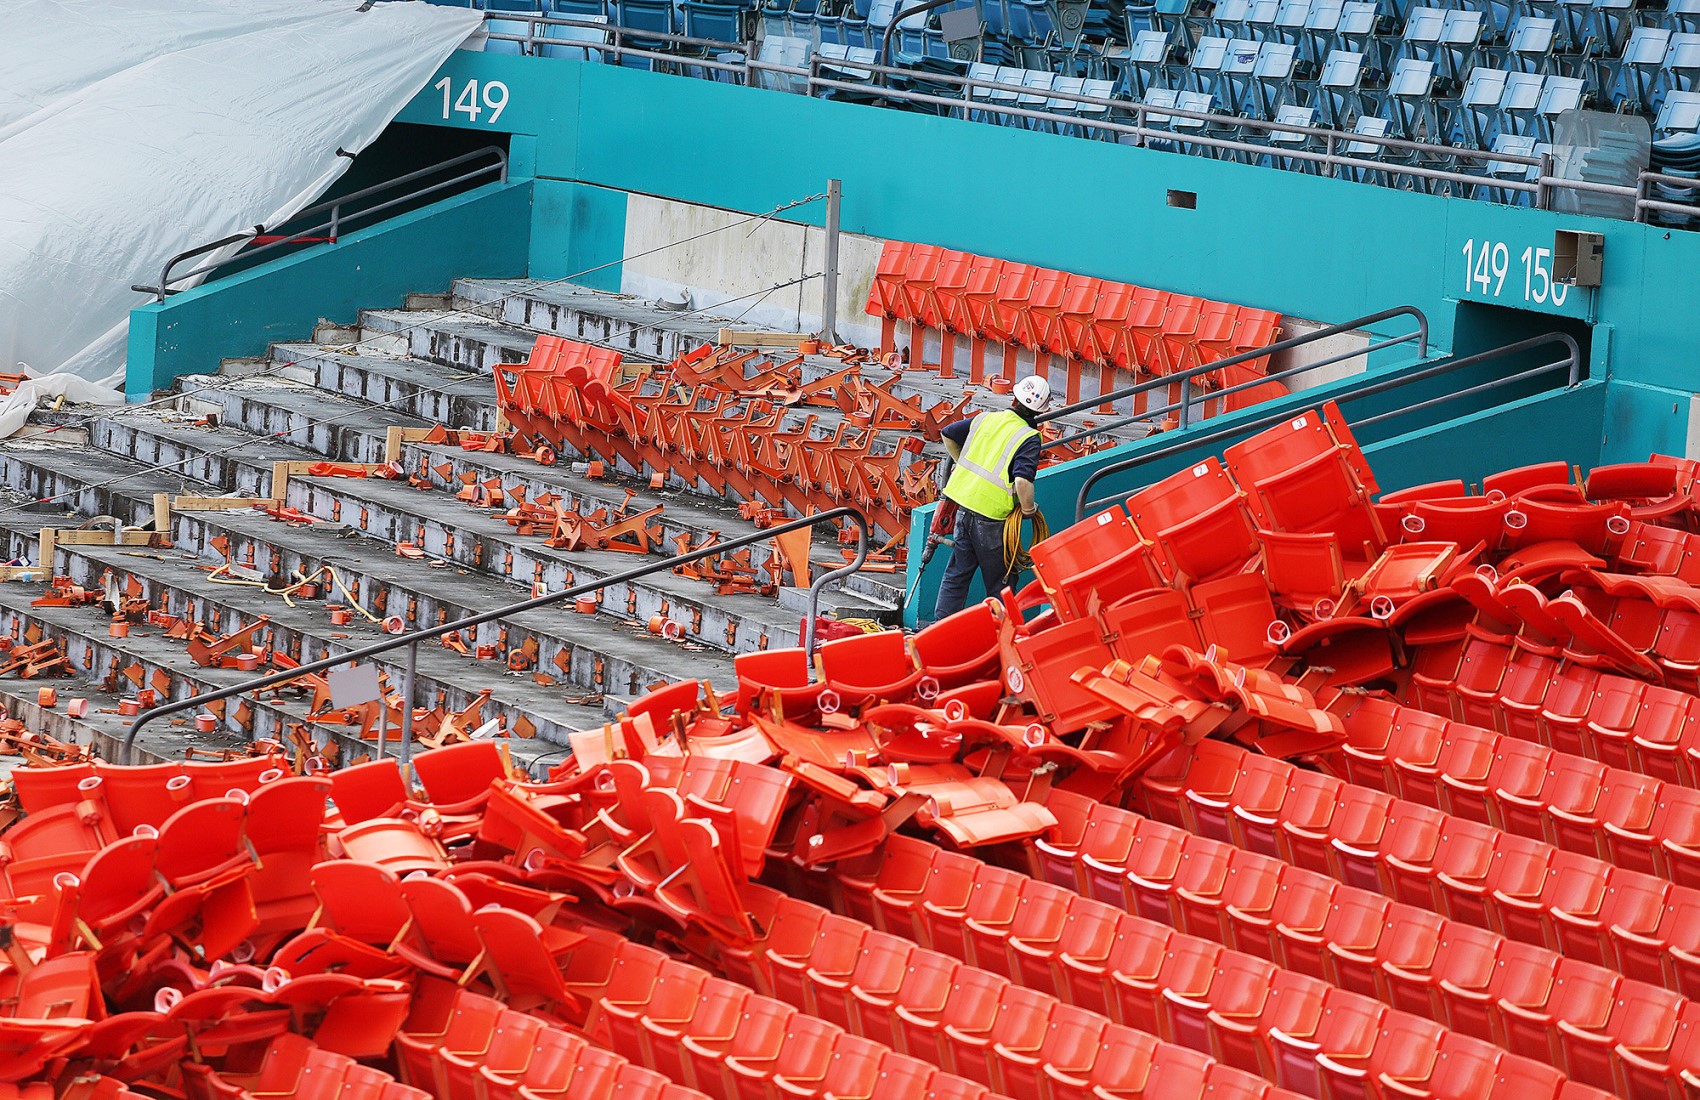 sfl-ddolphins-to-sell-old-sun-life-stadium-seats-video-20150707.jpg